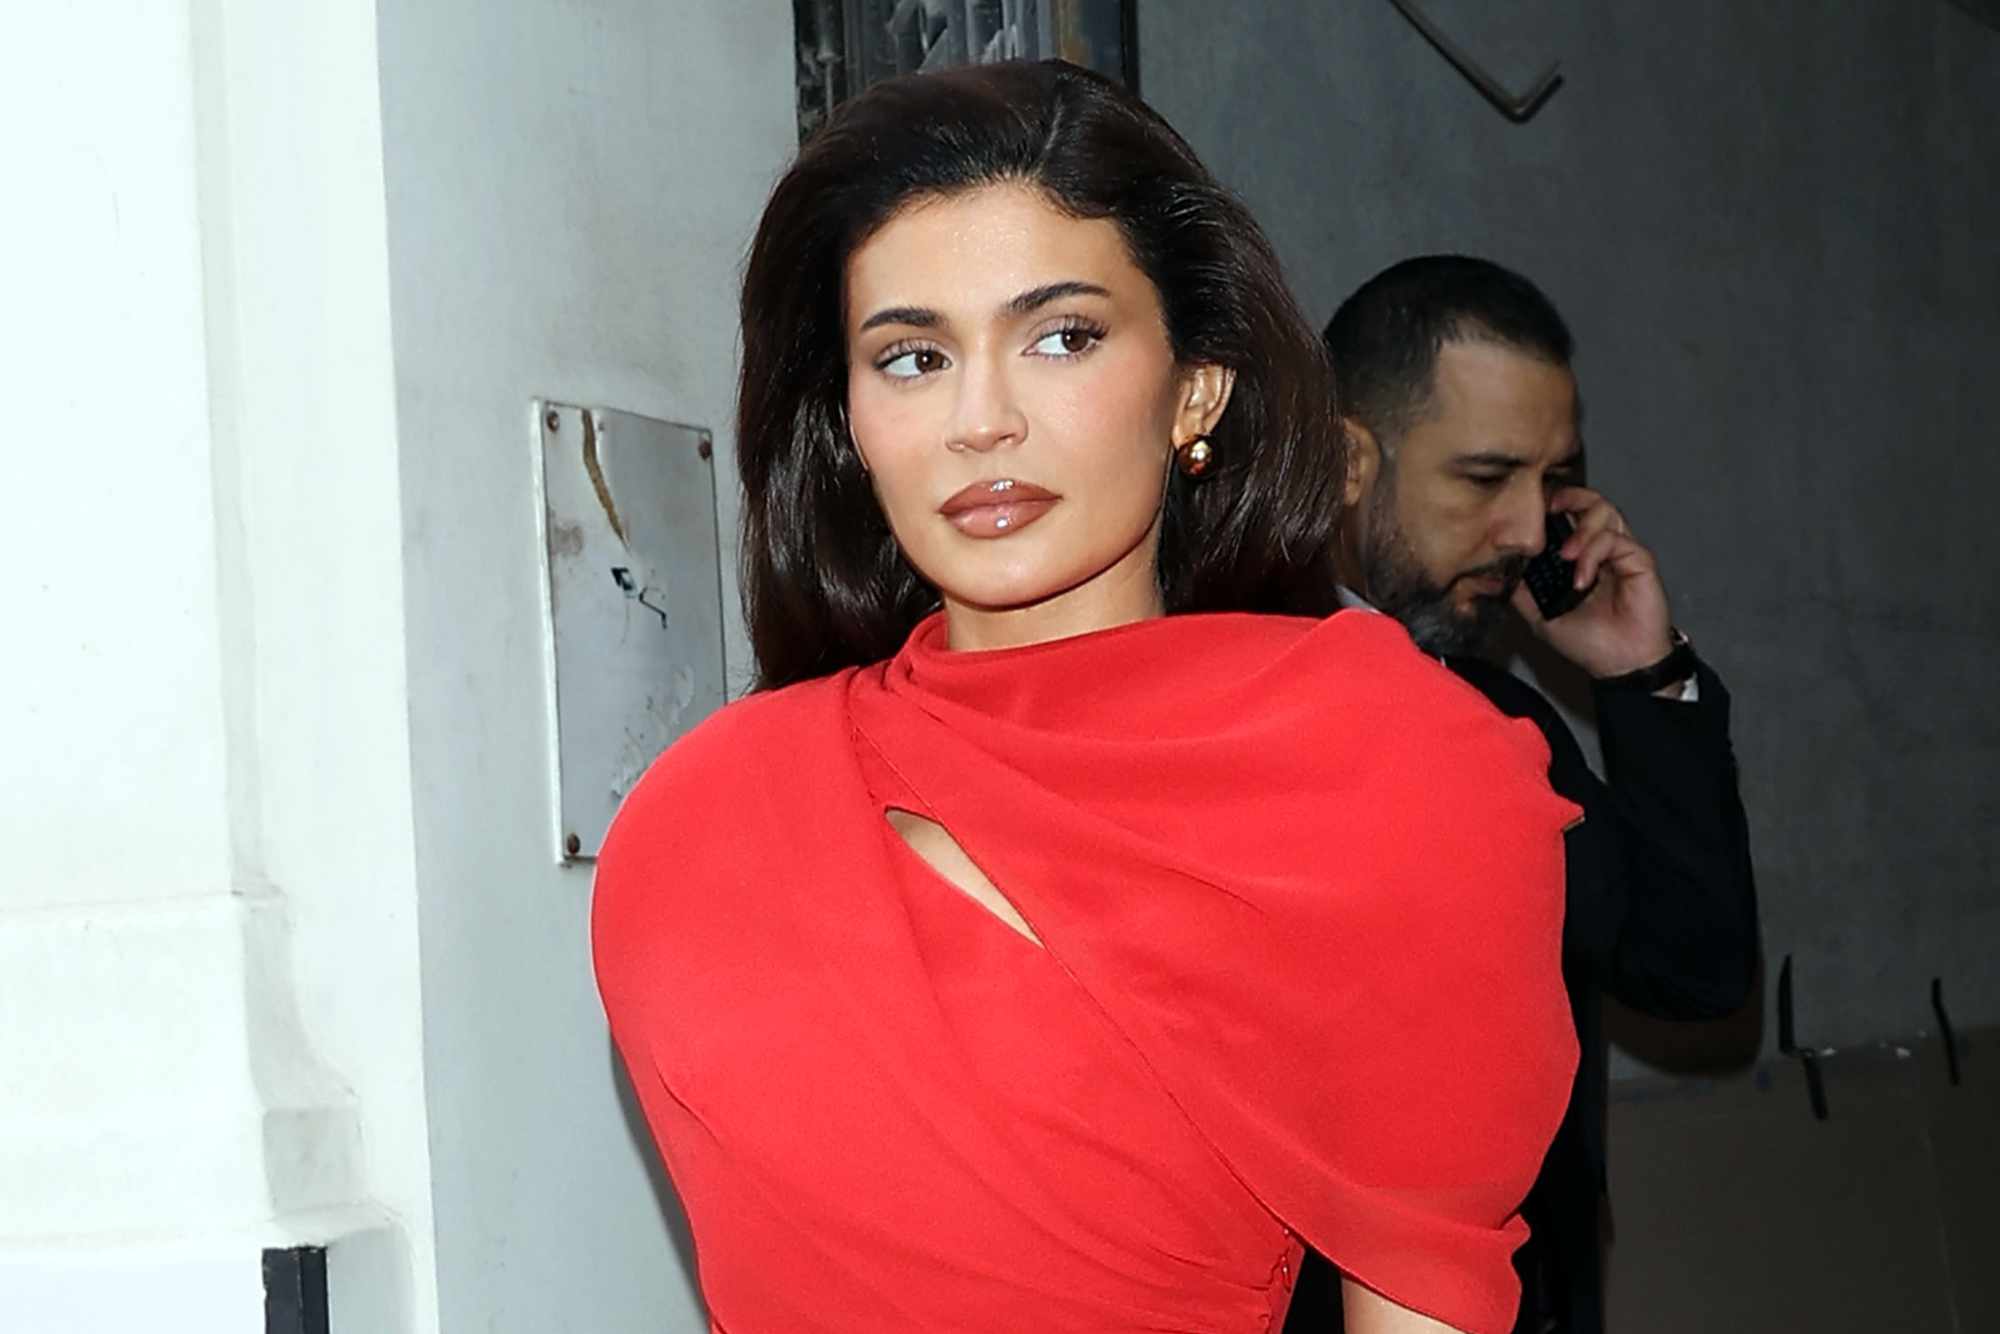 Kylie Jenner wears a red dress